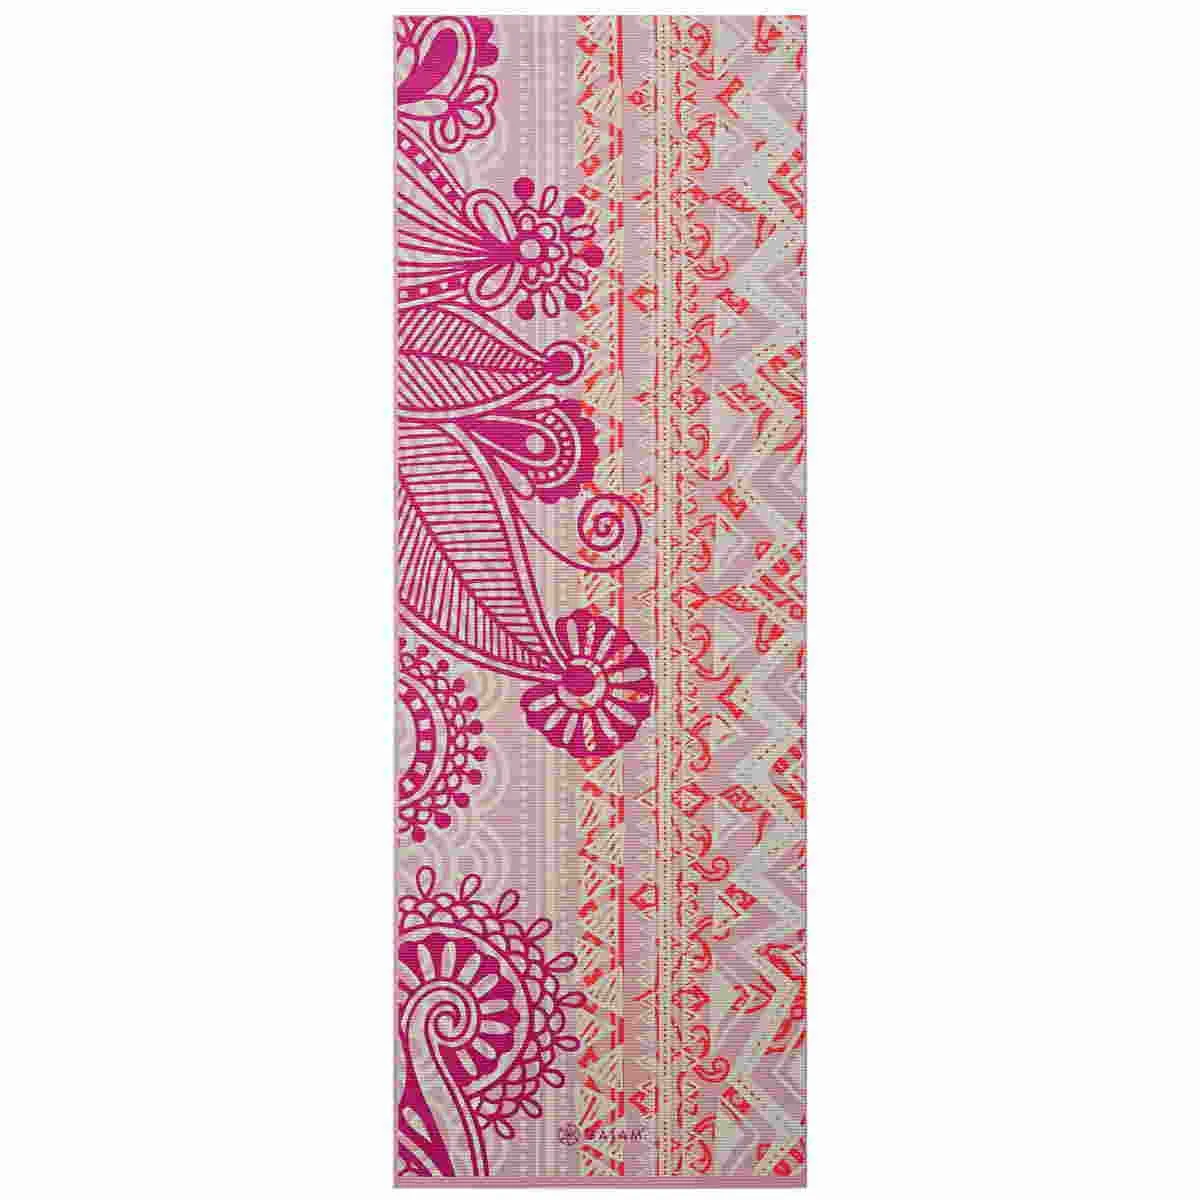 GAIAM yoga mat pink with bohemian rose pattern 4mm